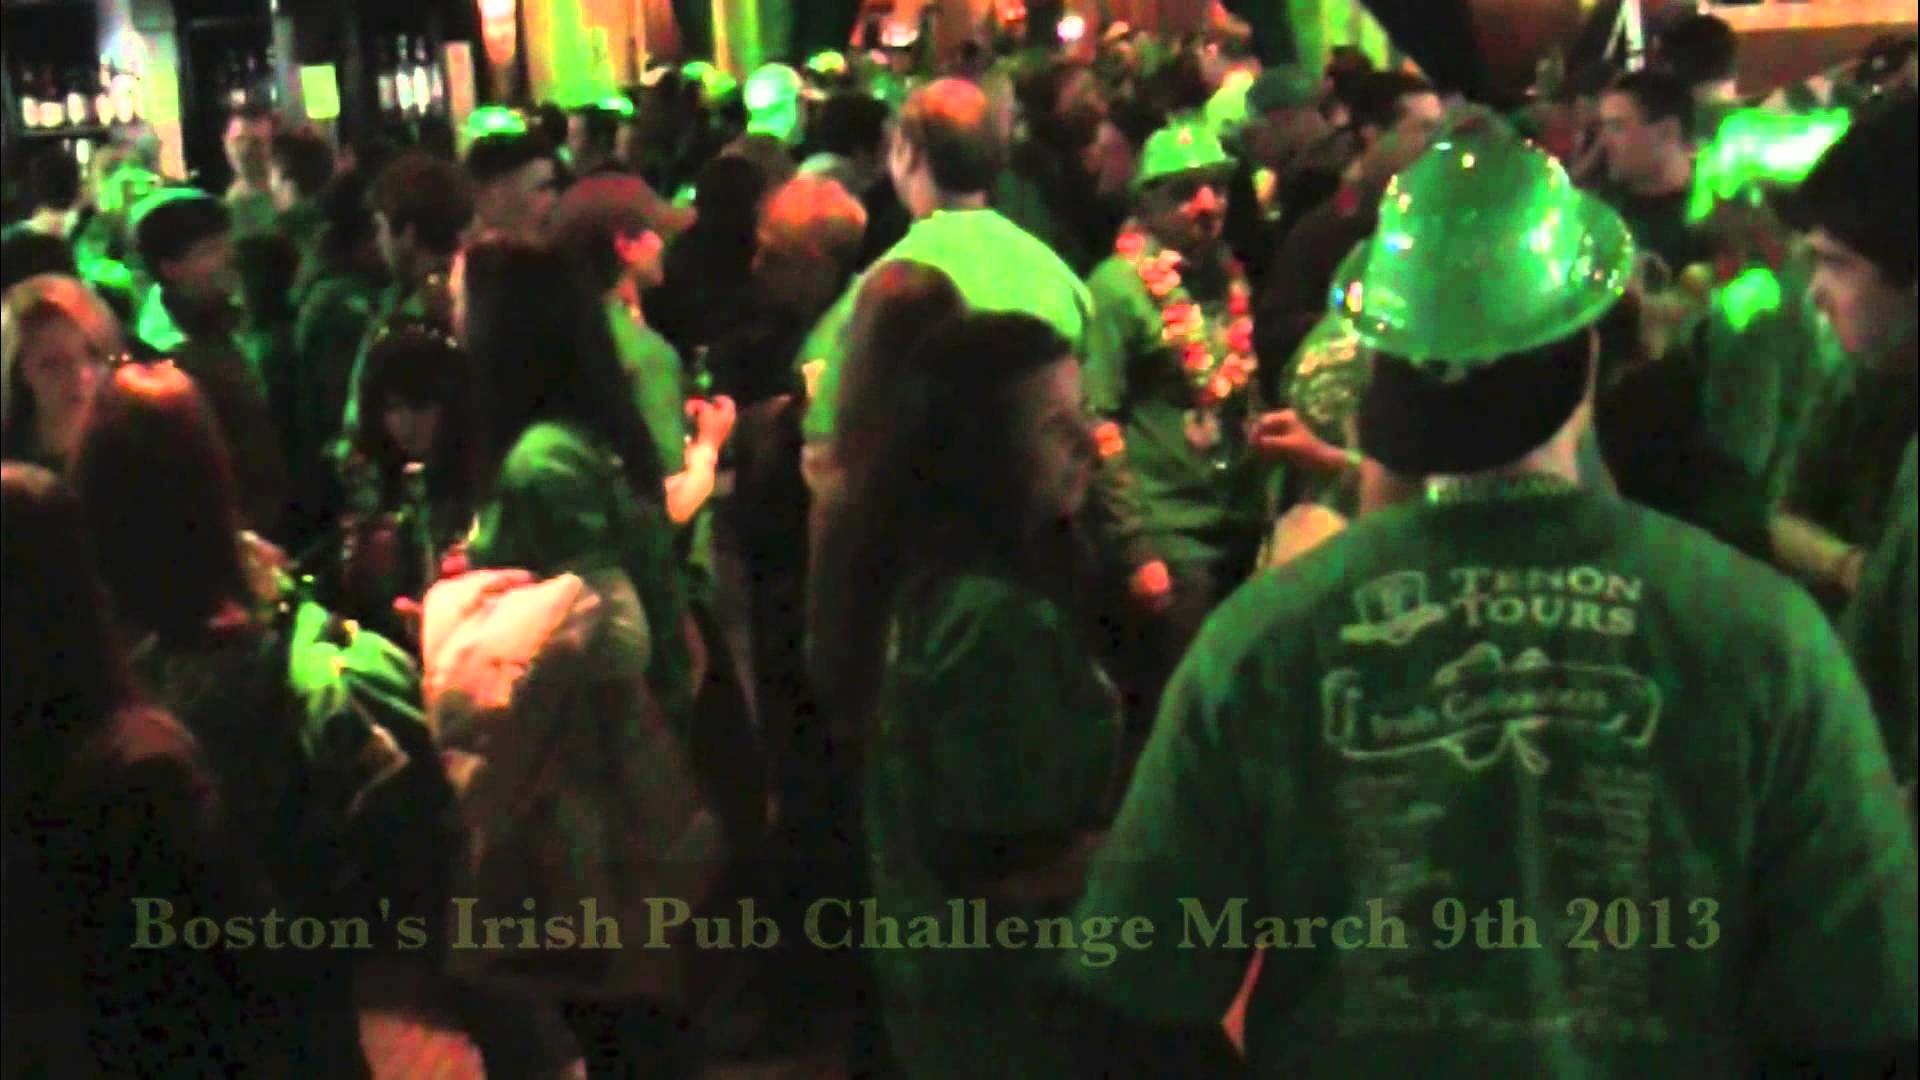 1920x1080 The Boston Irish pub challenge!